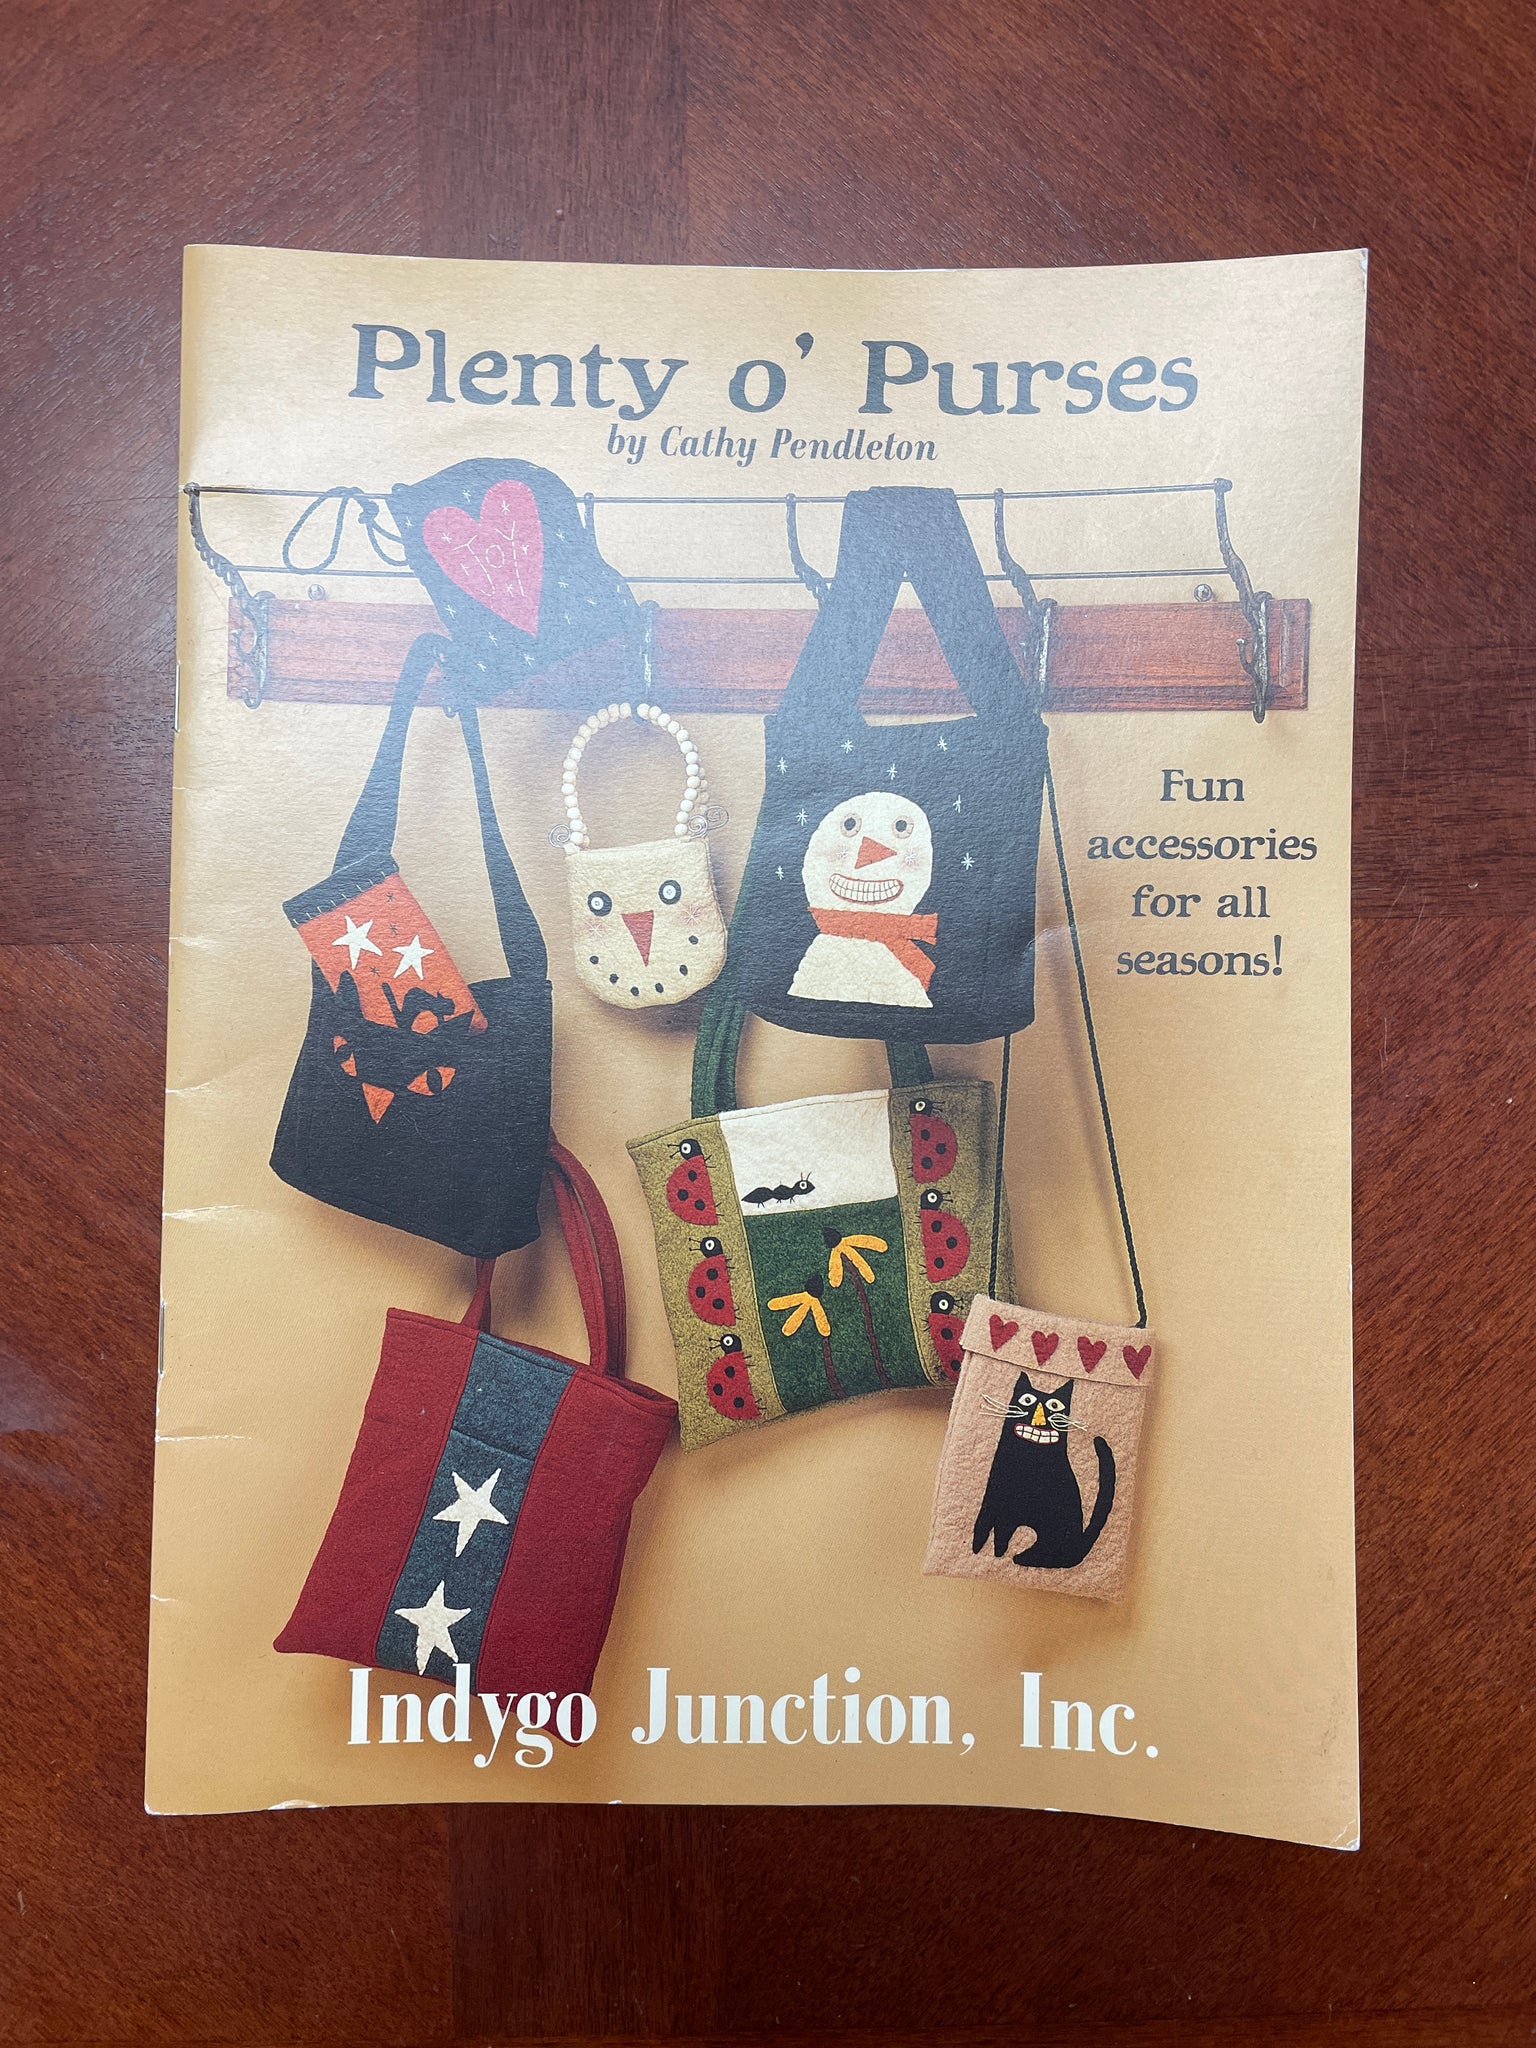 2002 Sewing Book - "Plenty o' Purses"